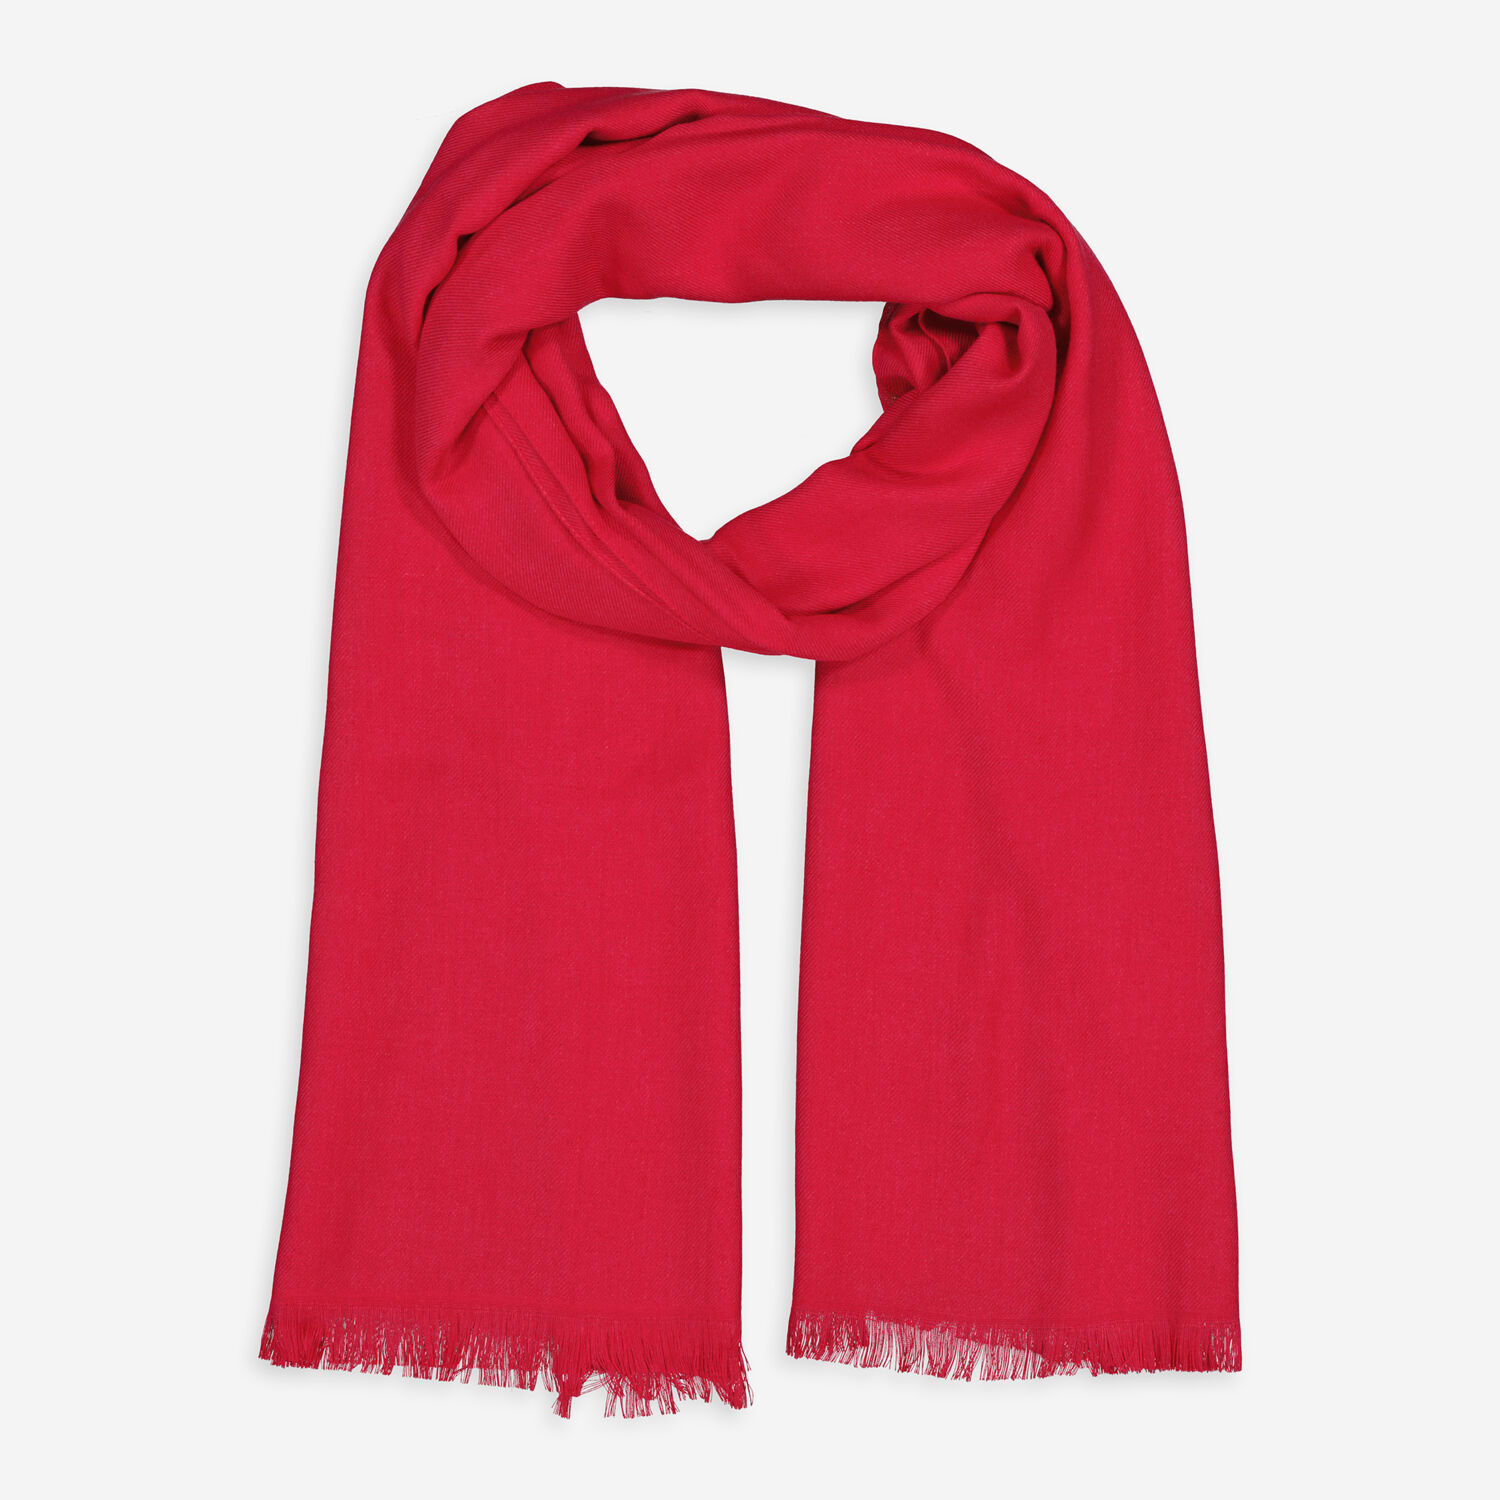 Темно-красный шарф с бахромой Galitzine шарф timberland с бахромой красный